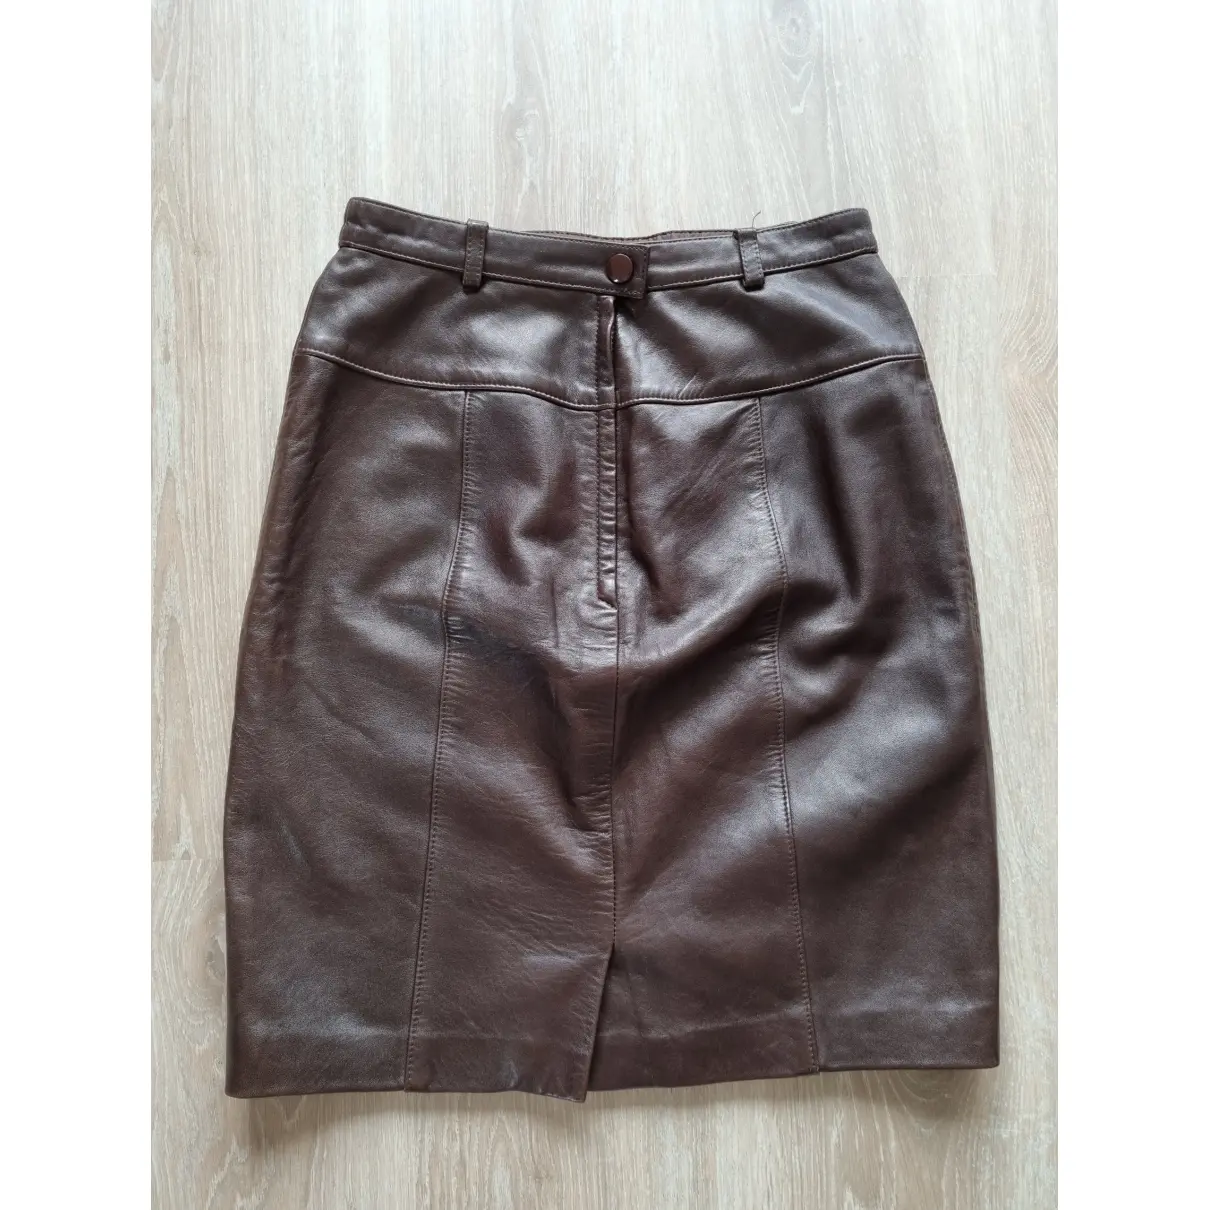 Buy Escada Leather mini skirt online - Vintage